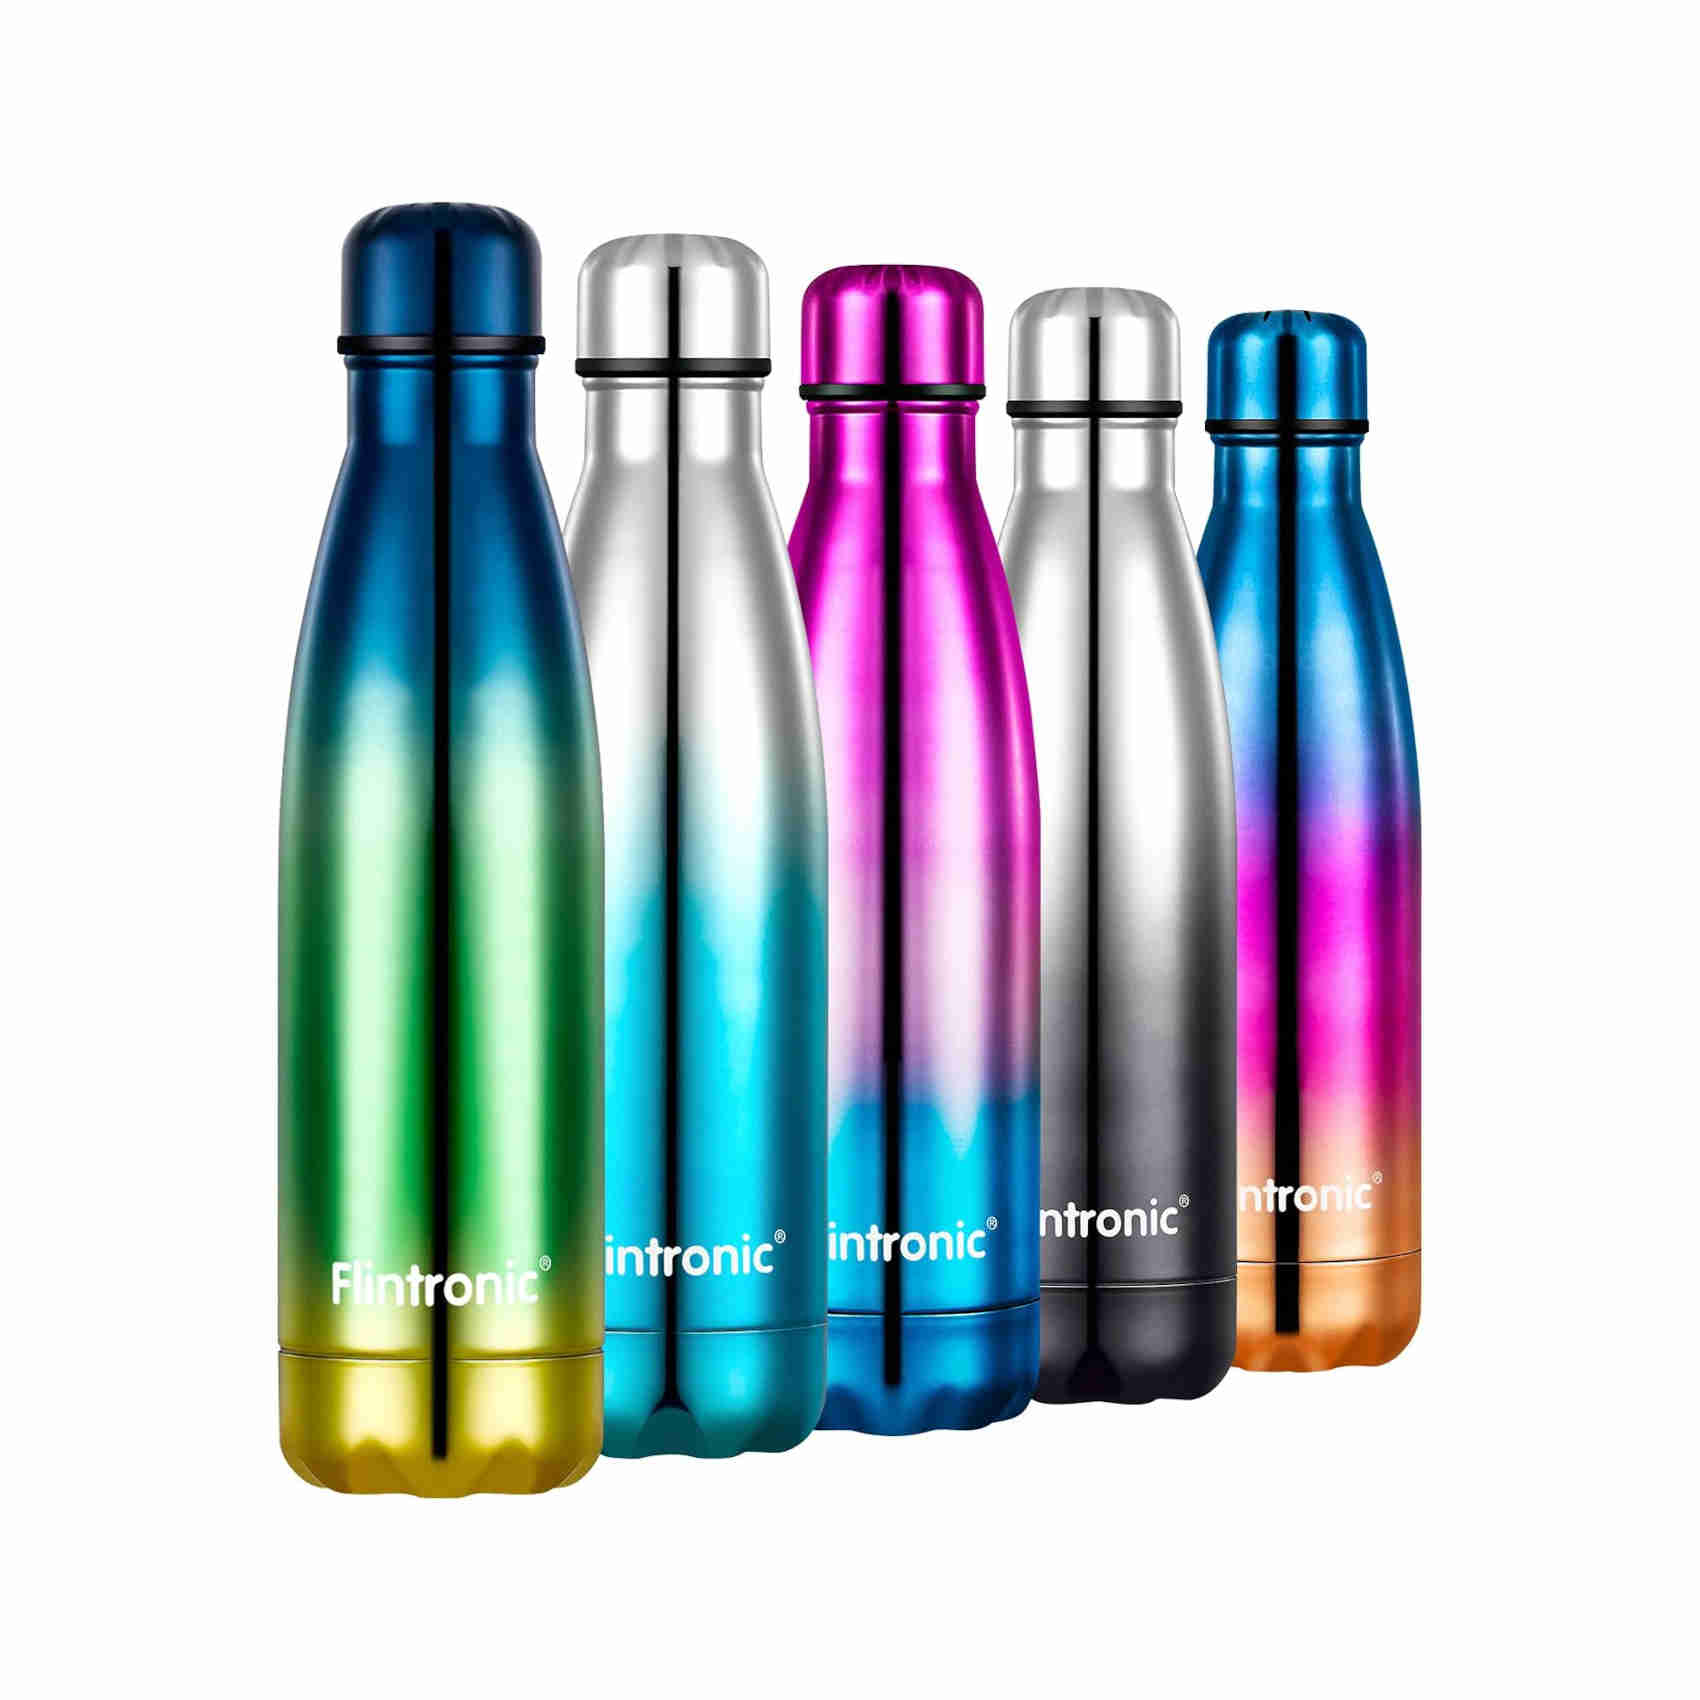 rdnstreetmarket flintronic bottiglia acqua in acciaio inox, 500ml portatile borraccia, senza bpa, borraccia termica acciaio inox, bottiglia d'acqua con spazzola bianco uomo